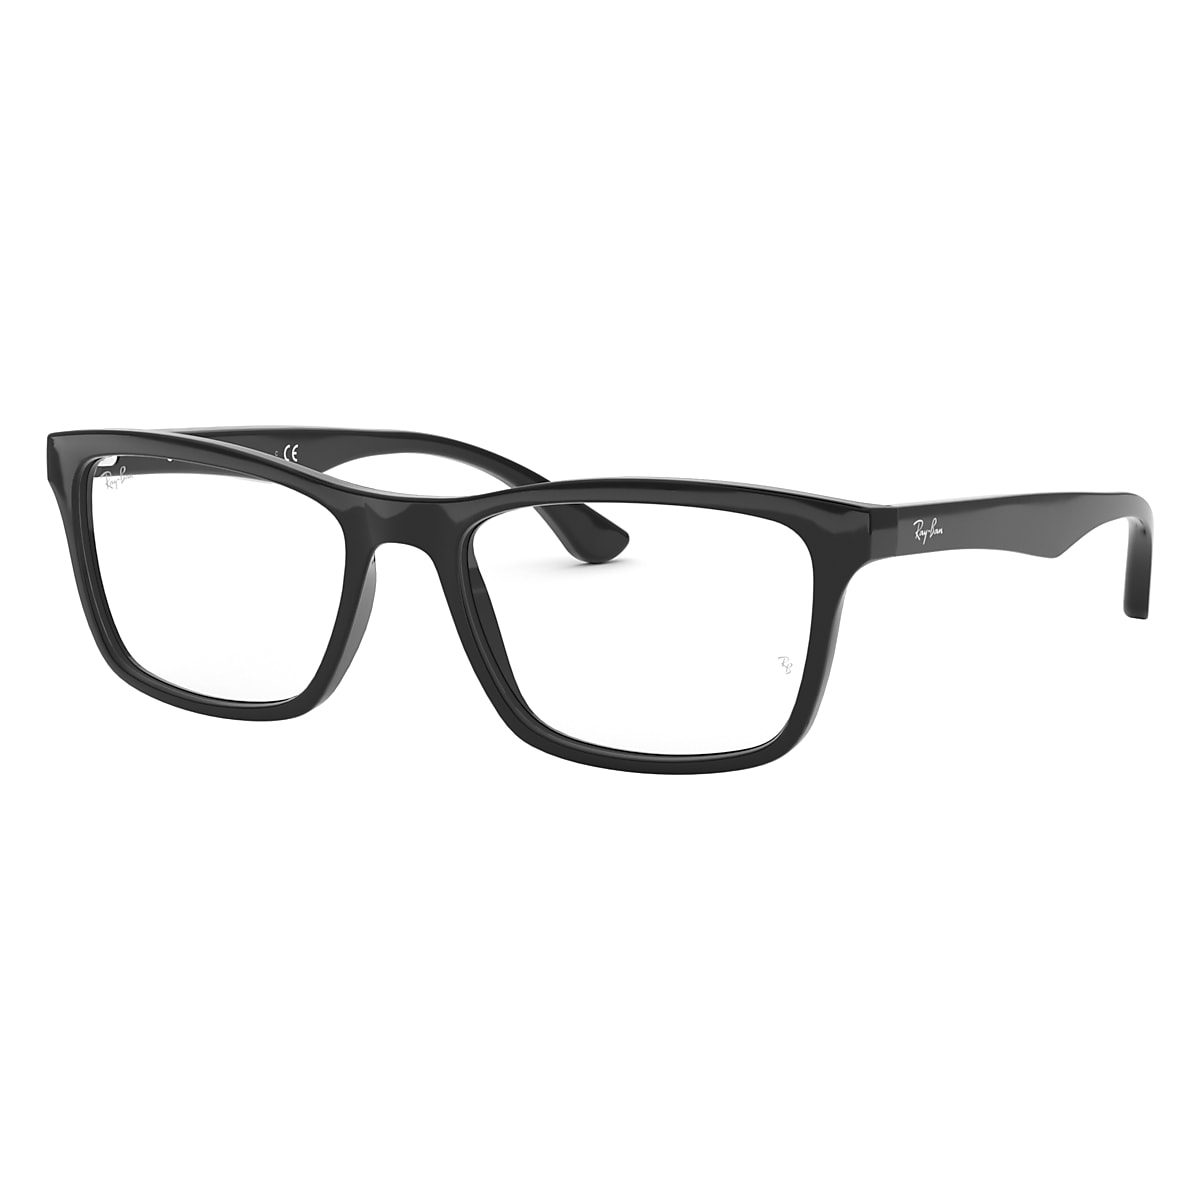 RB5279 OPTICS Eyeglasses with Black Frame - RB5279F - Ray-Ban